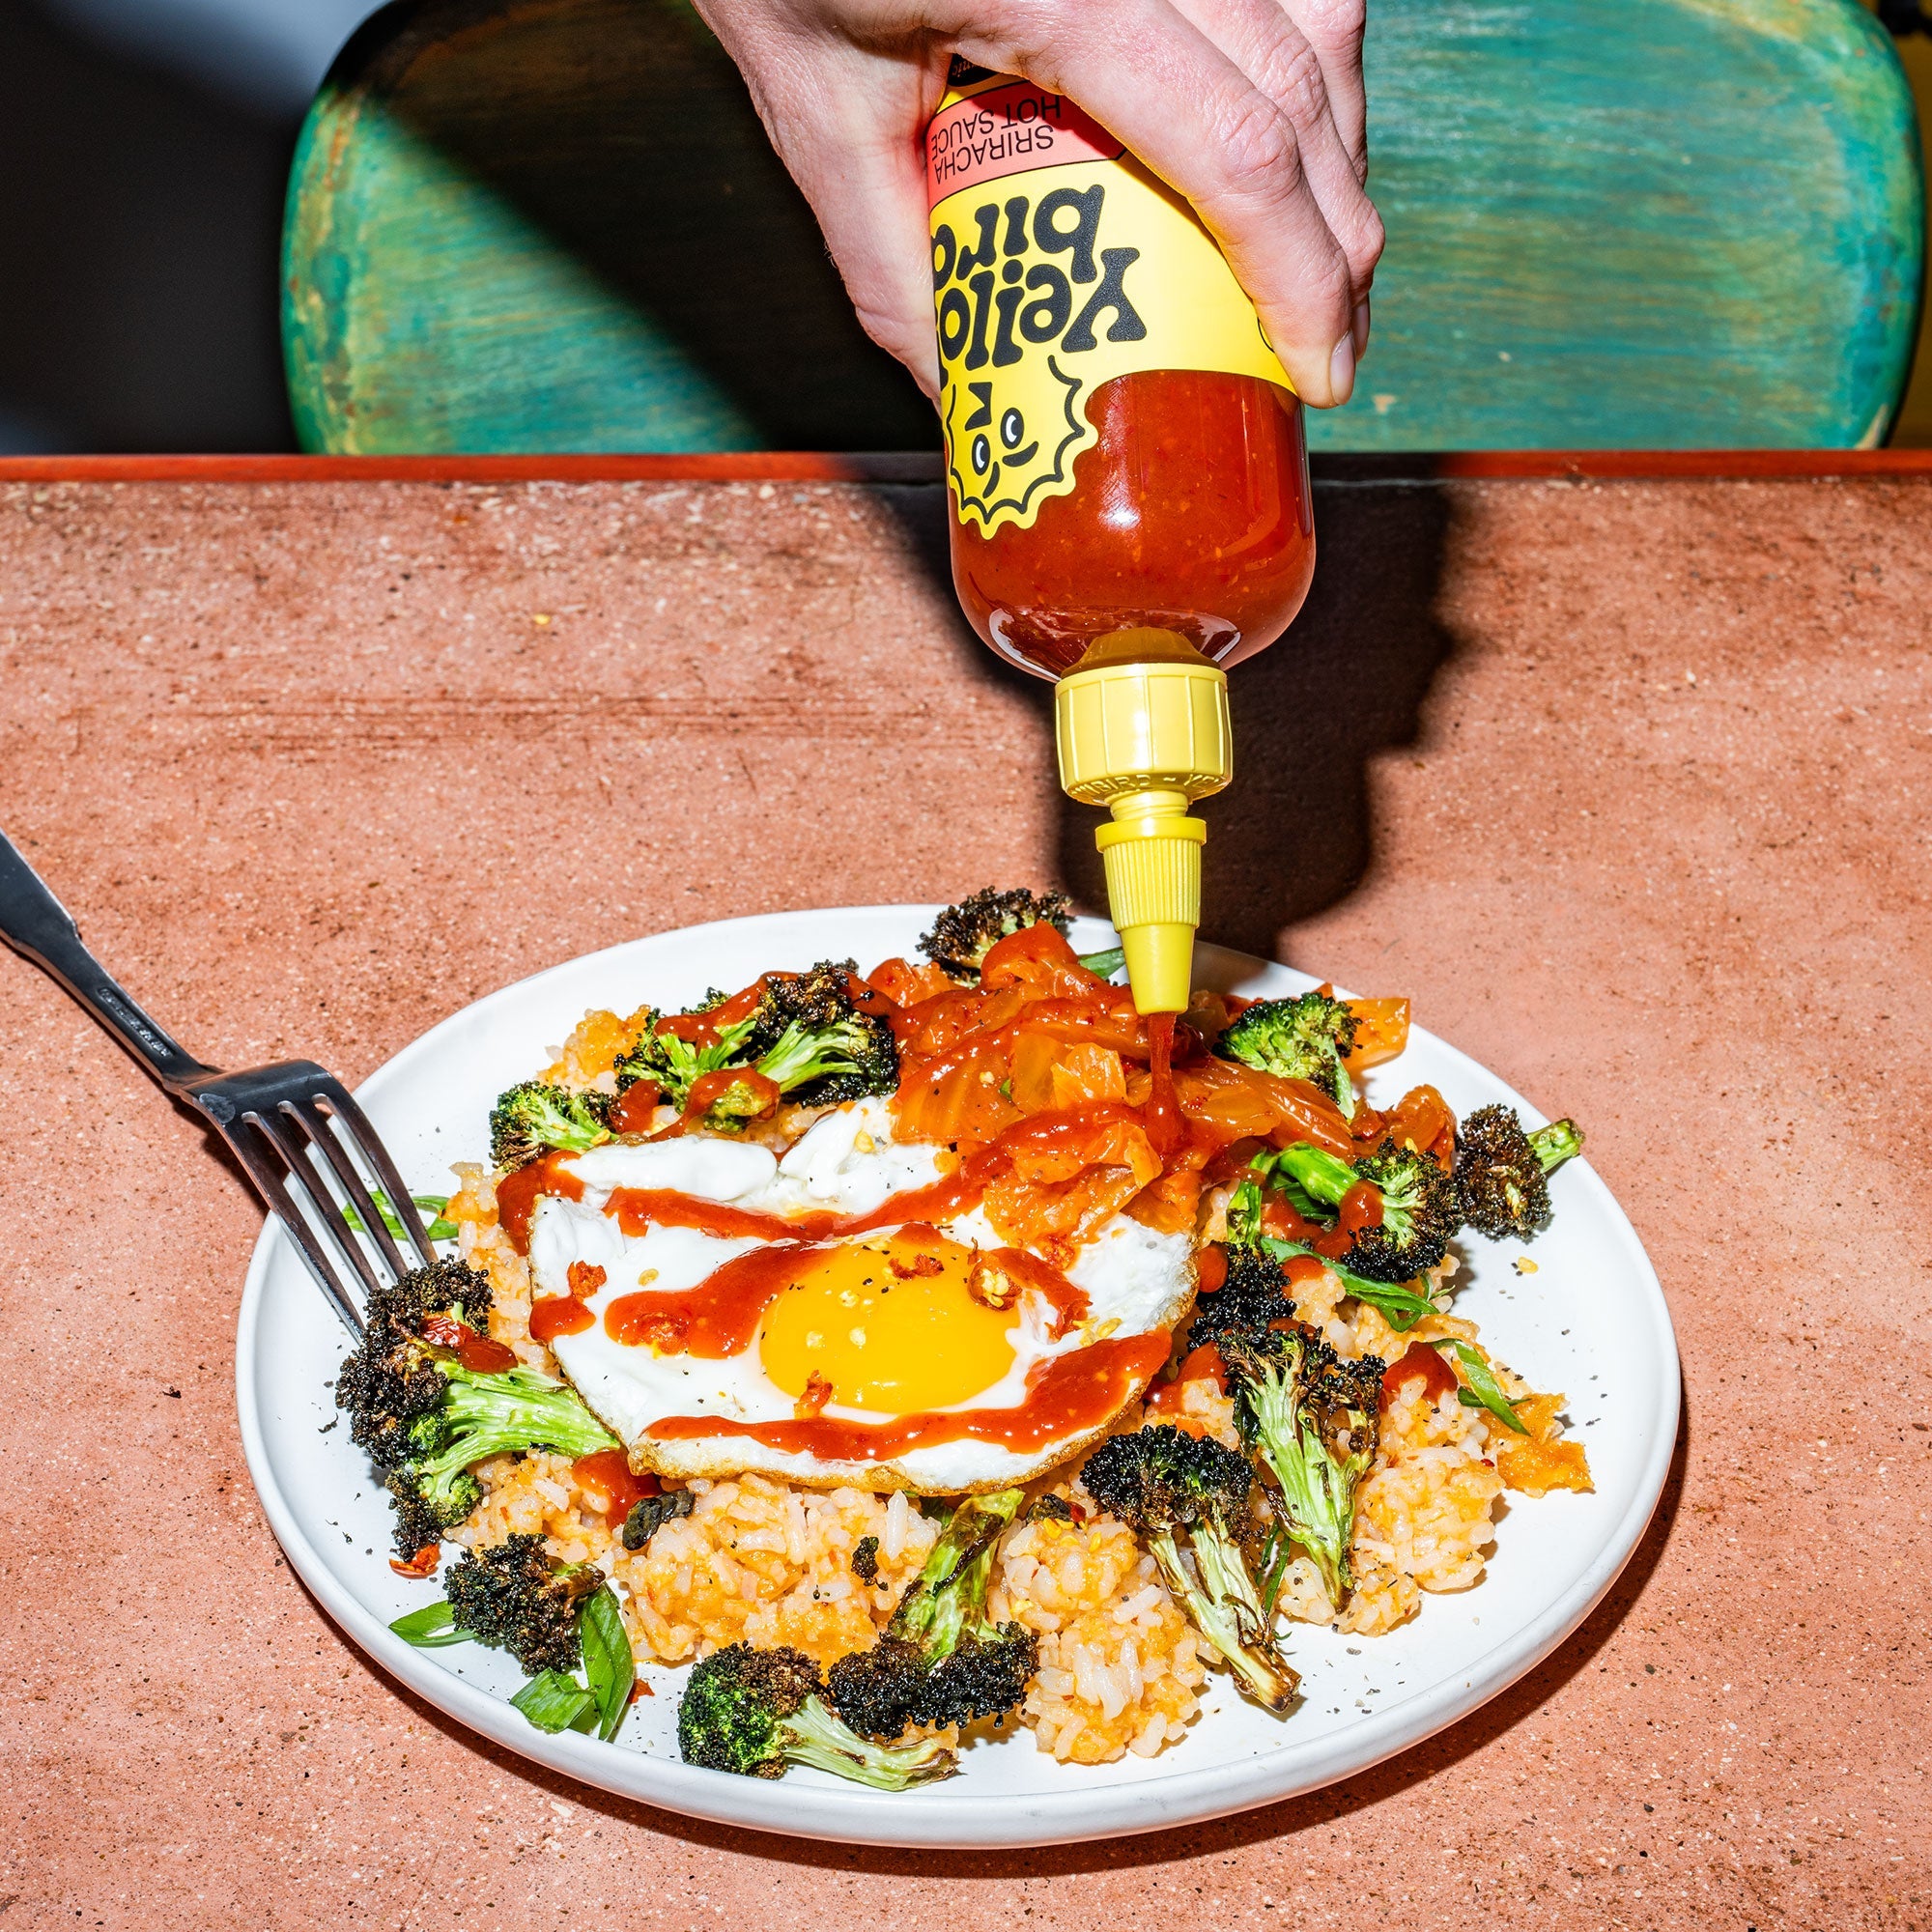 Yellowbird Organic Sriracha drizzled onto fried rice w/ sunny side up egg